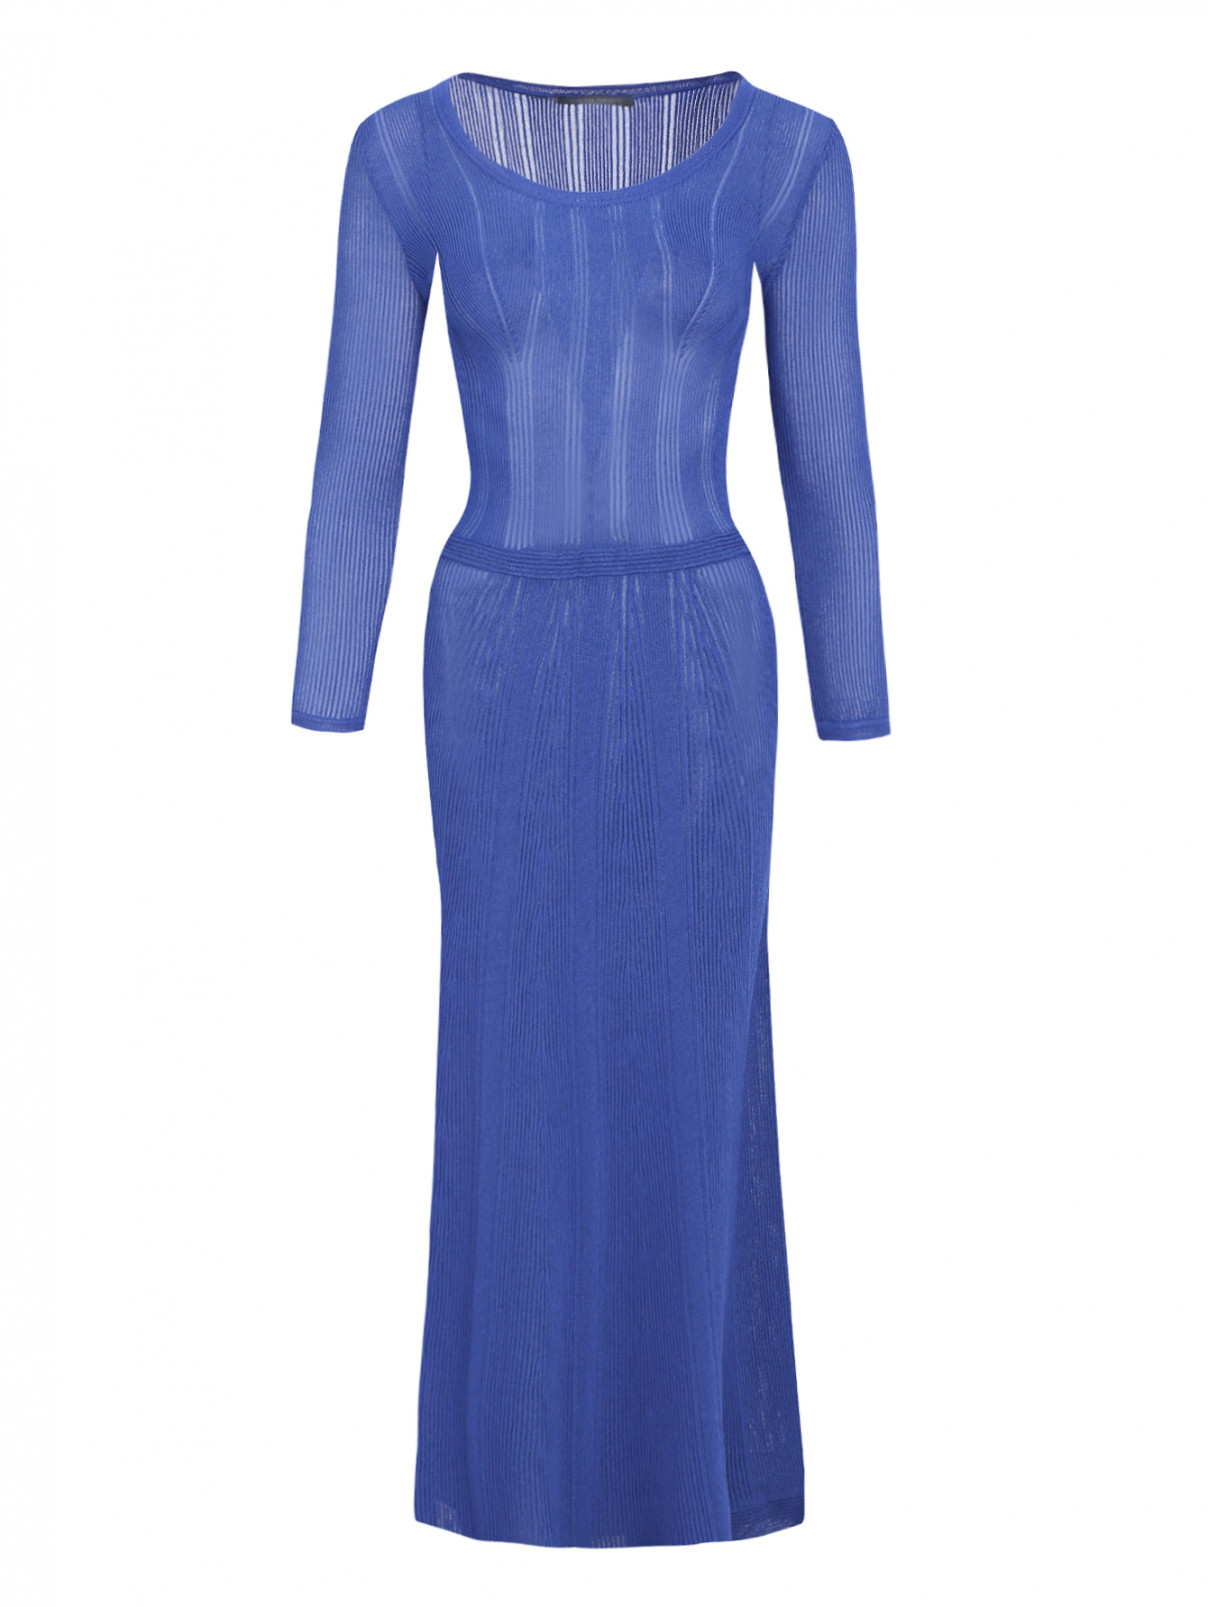 Трикотажное платье-макси с рукавами 3/4 Alberta Ferretti  –  Общий вид  – Цвет:  Синий